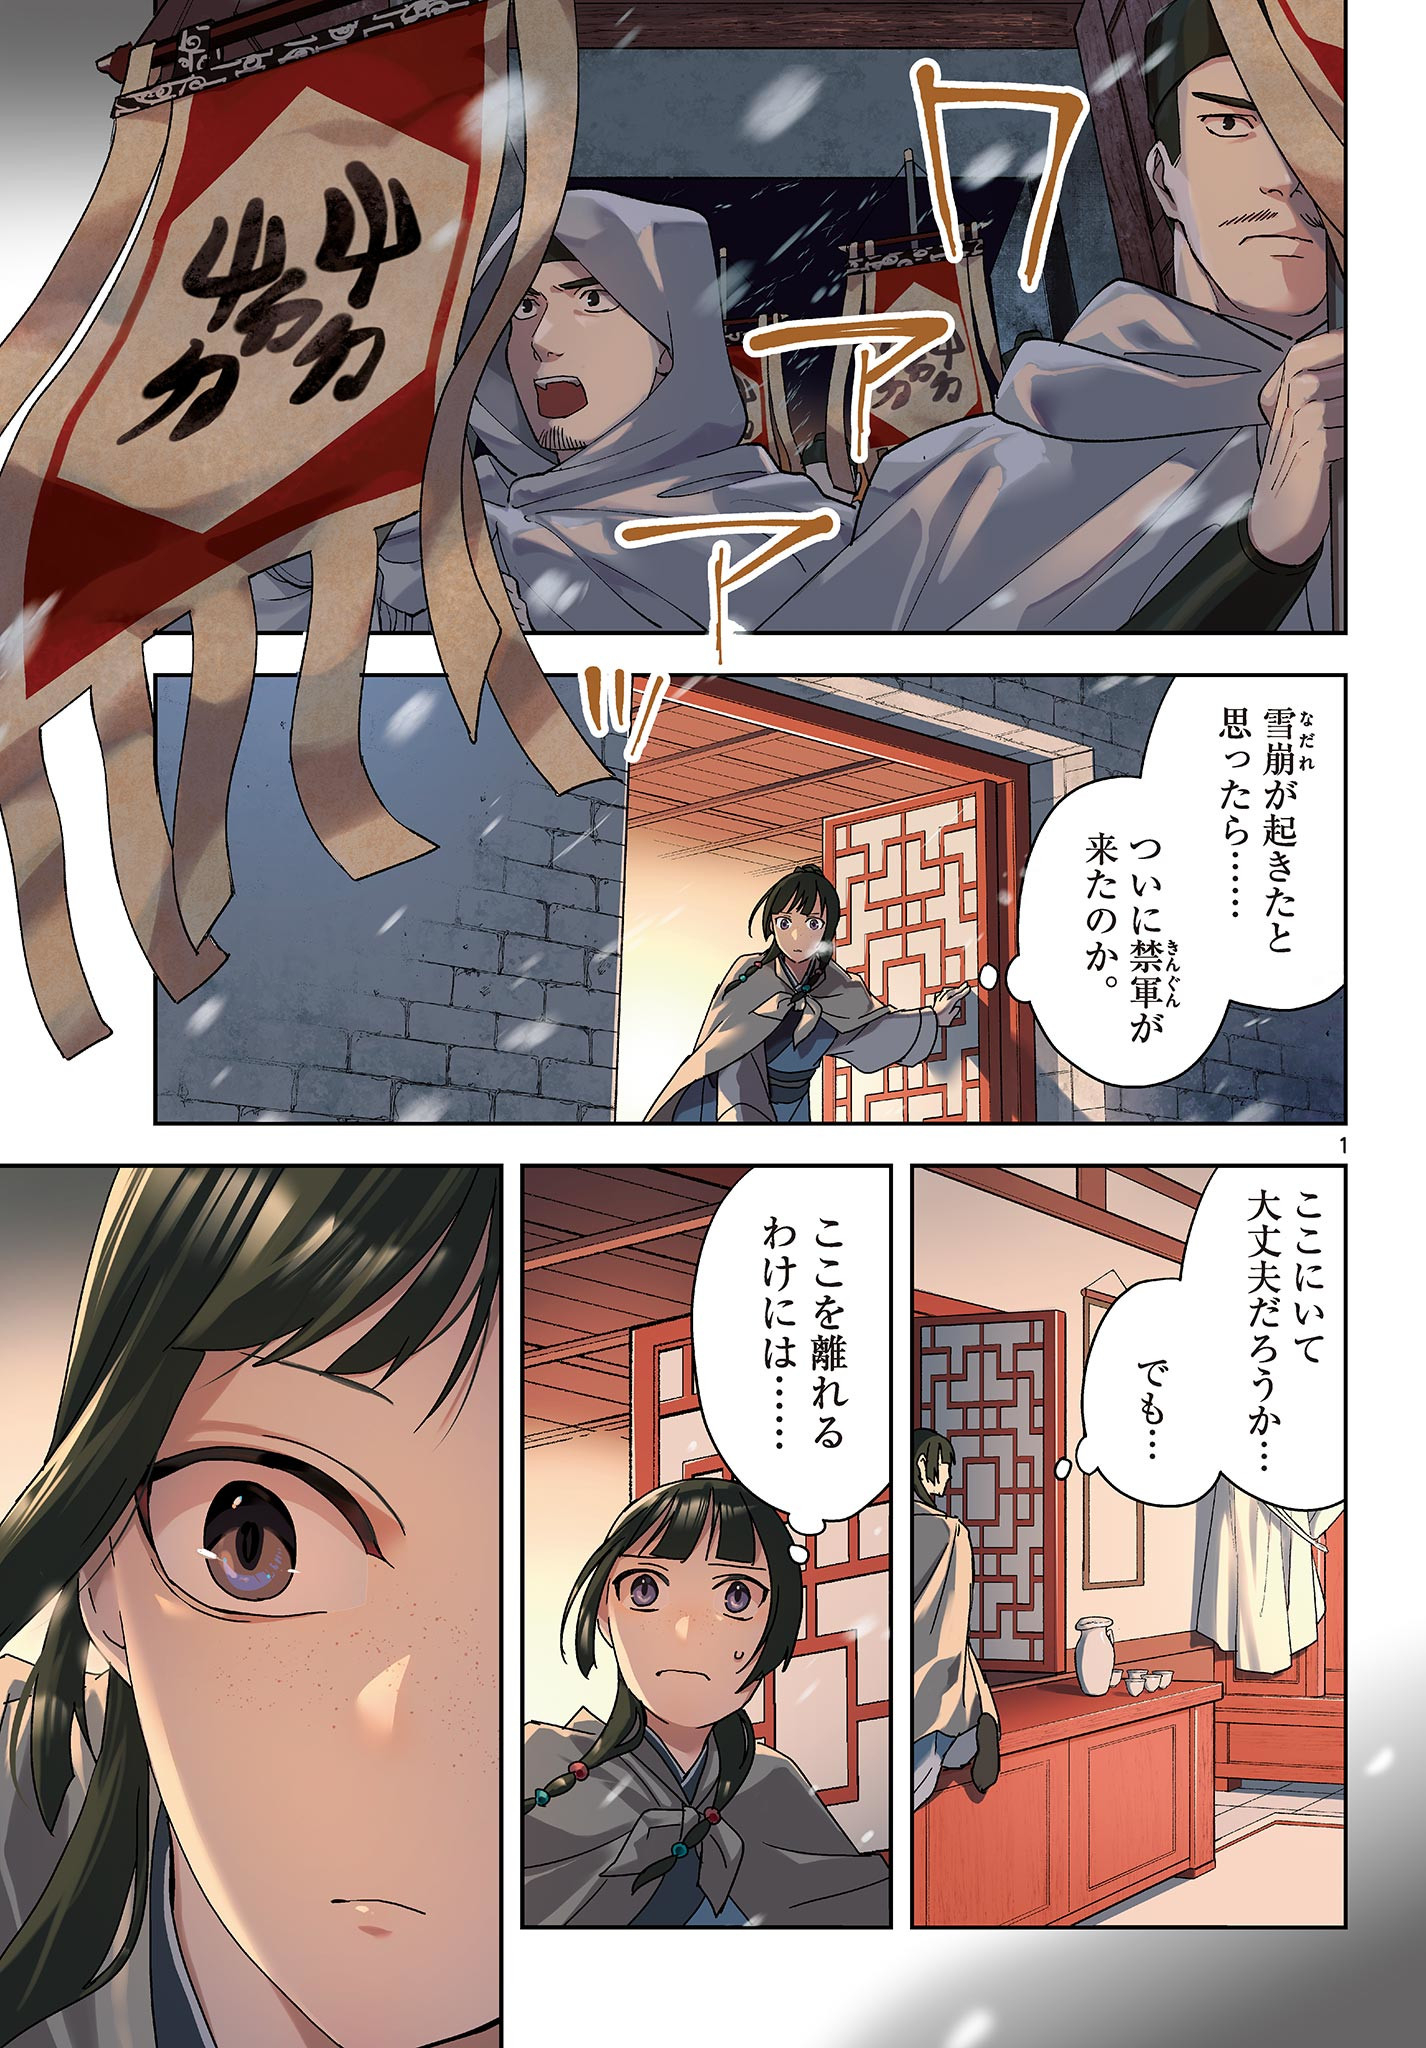 Kusuriya no Hitorigoto - Chapter 77 - Page 1